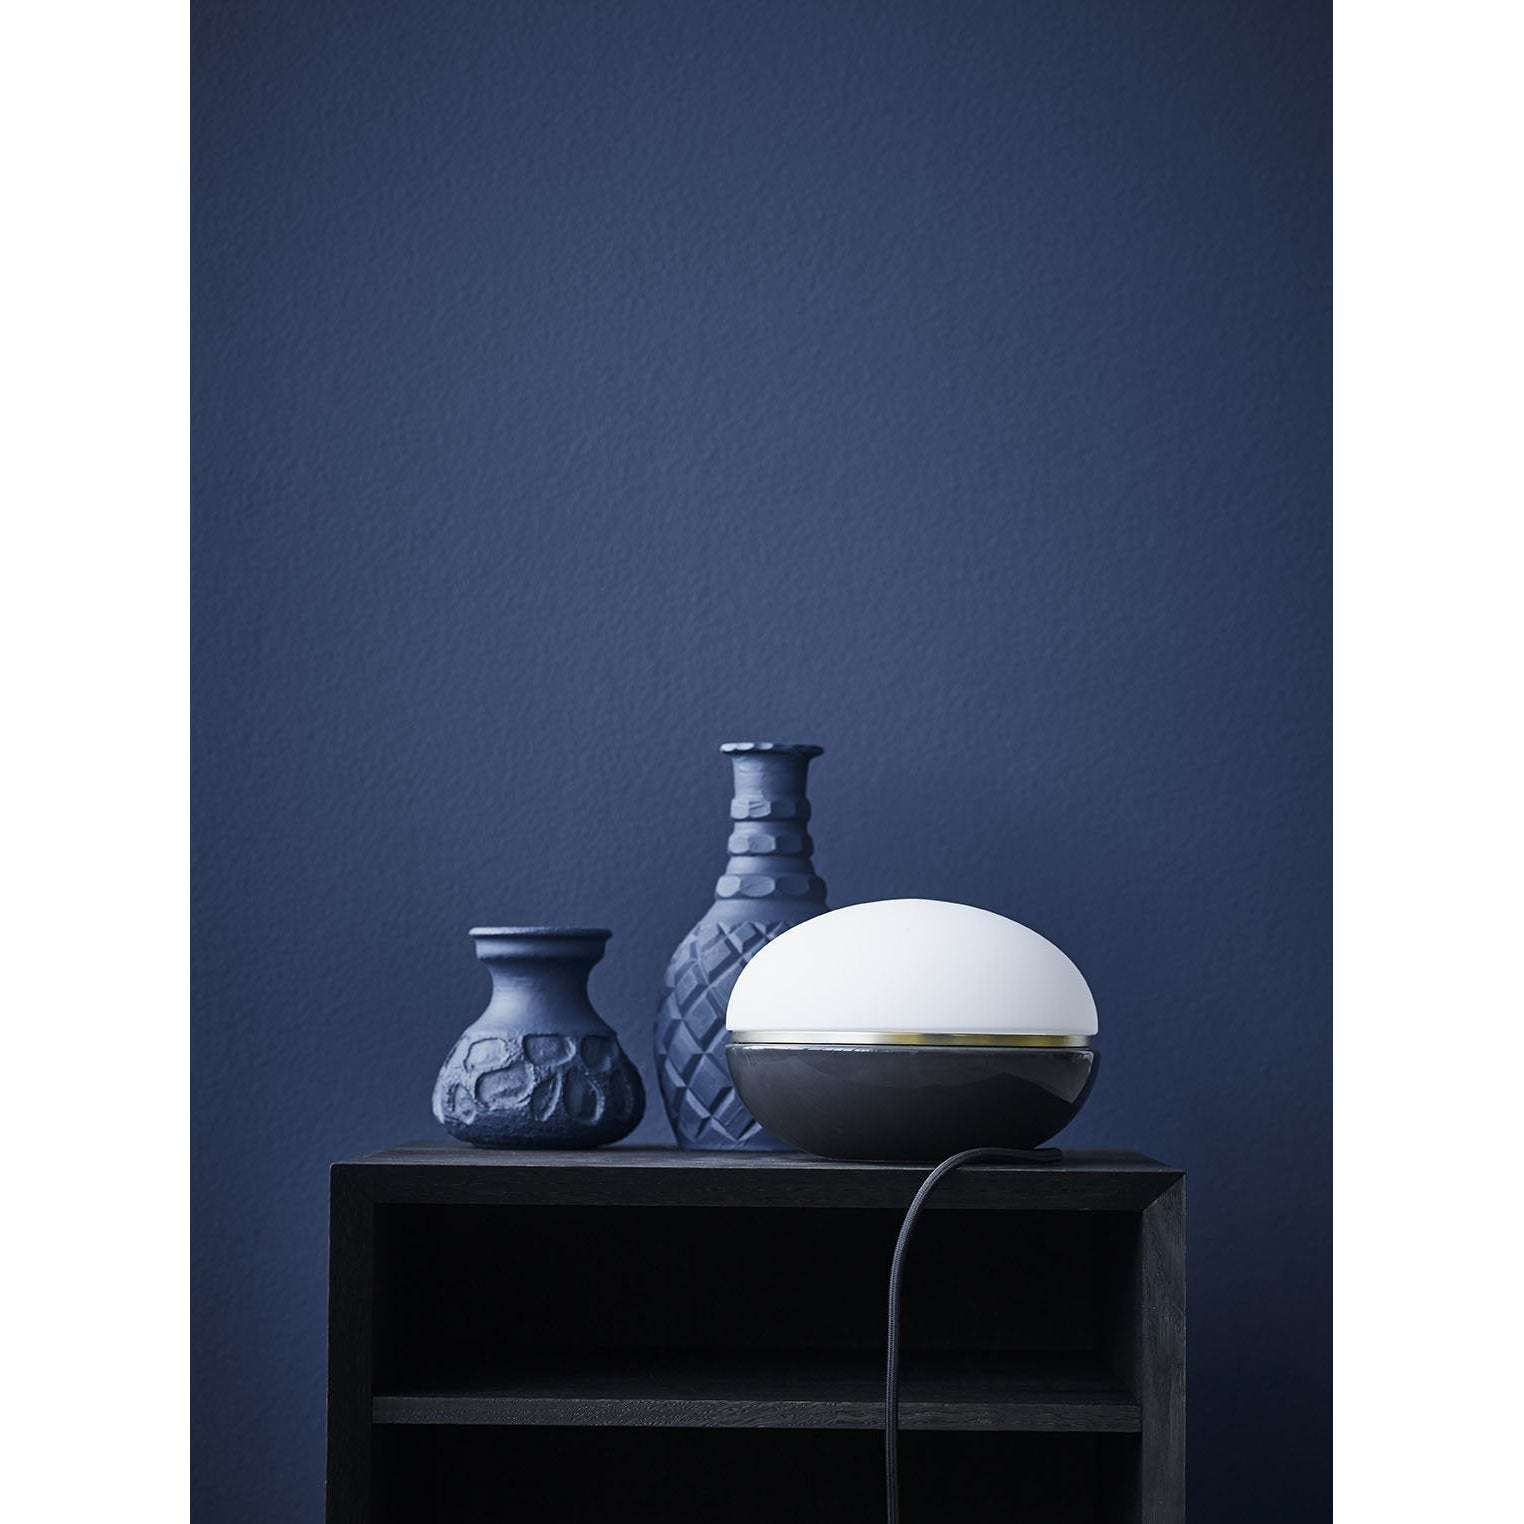 Lucie Kaas Macaroon Table Lamp Light Grey, 18cm